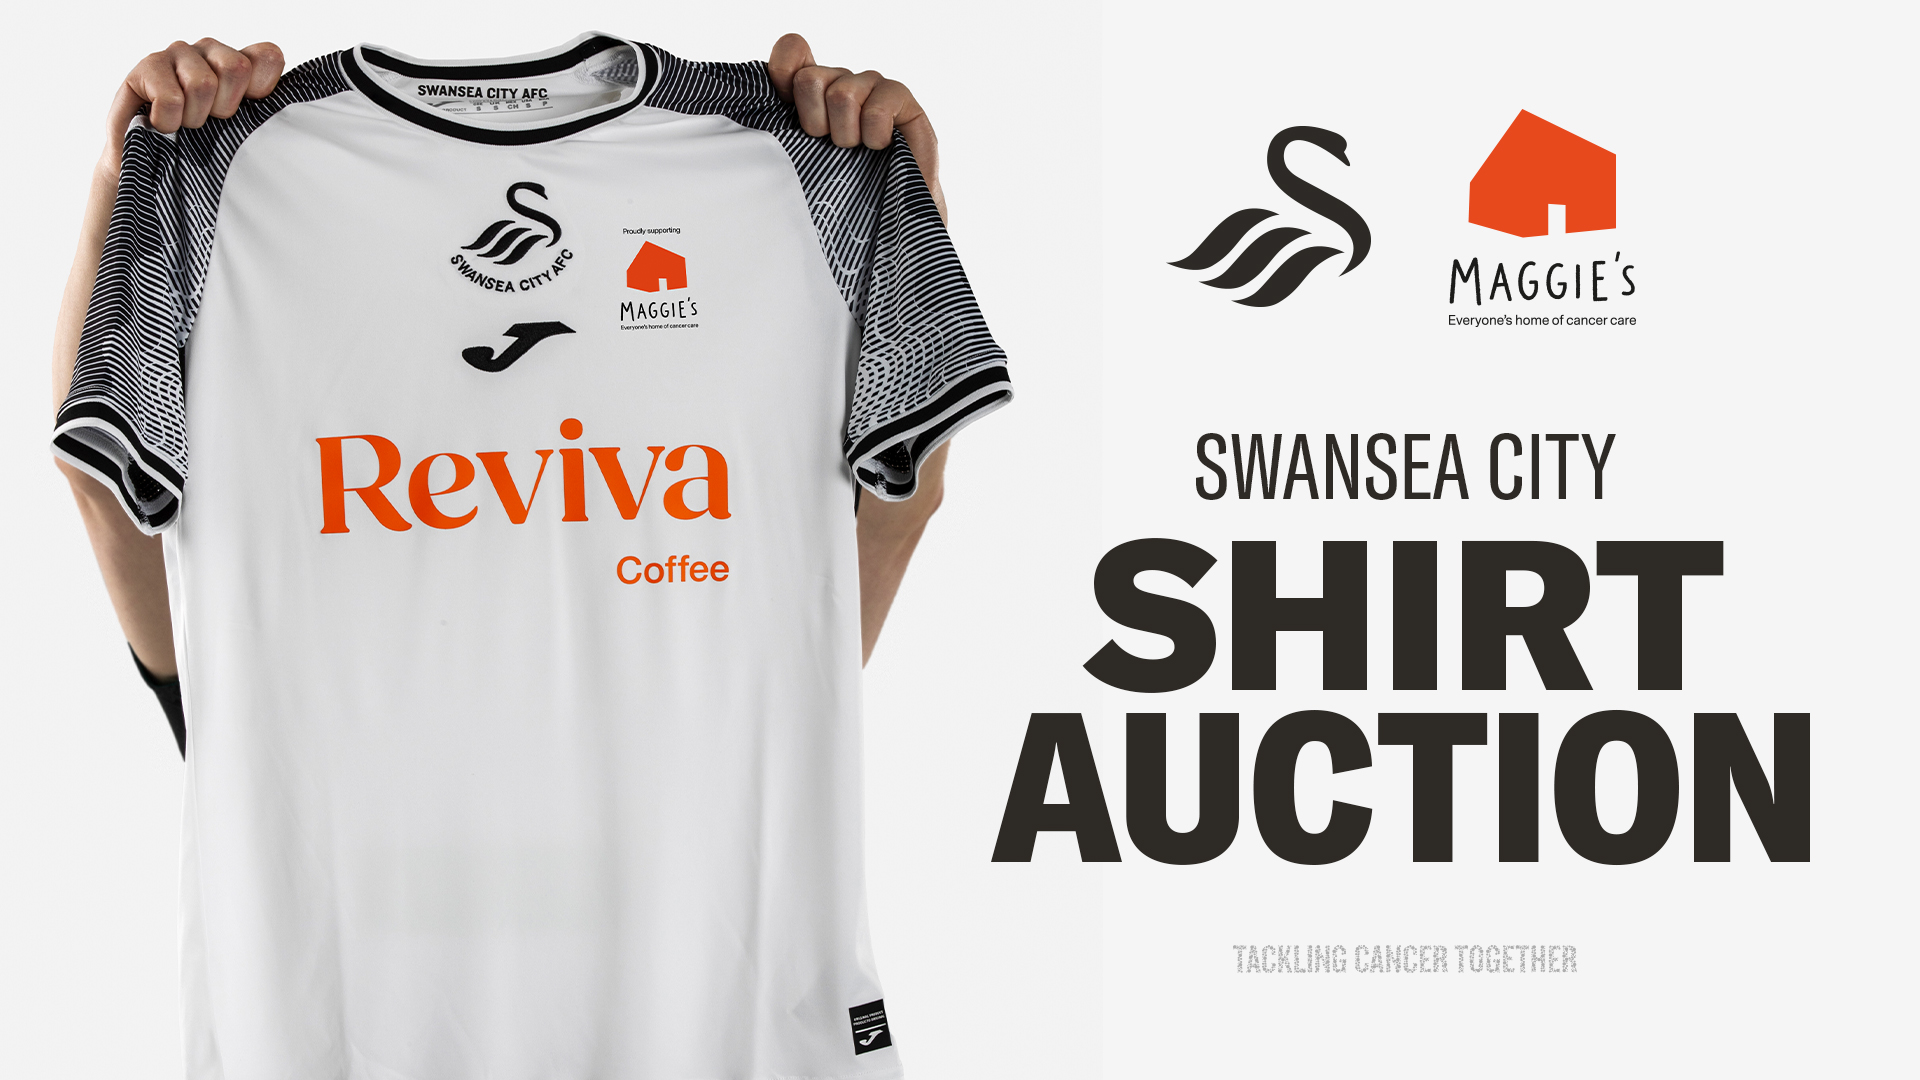 Swansea City shirt auction